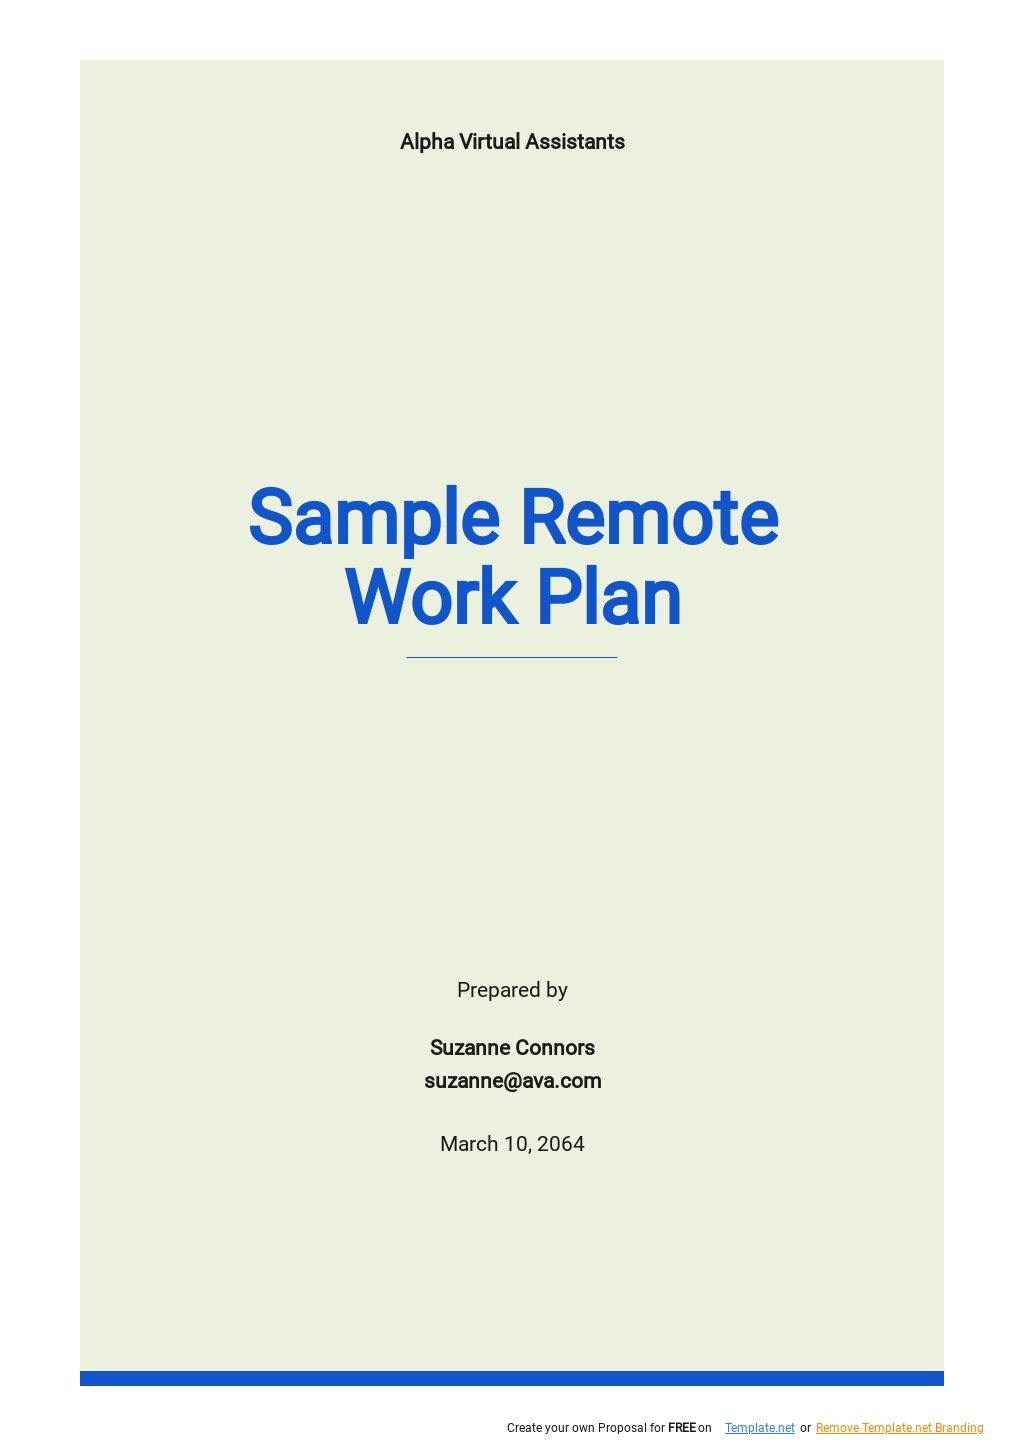 Sample Remote Work Plan Template.jpe